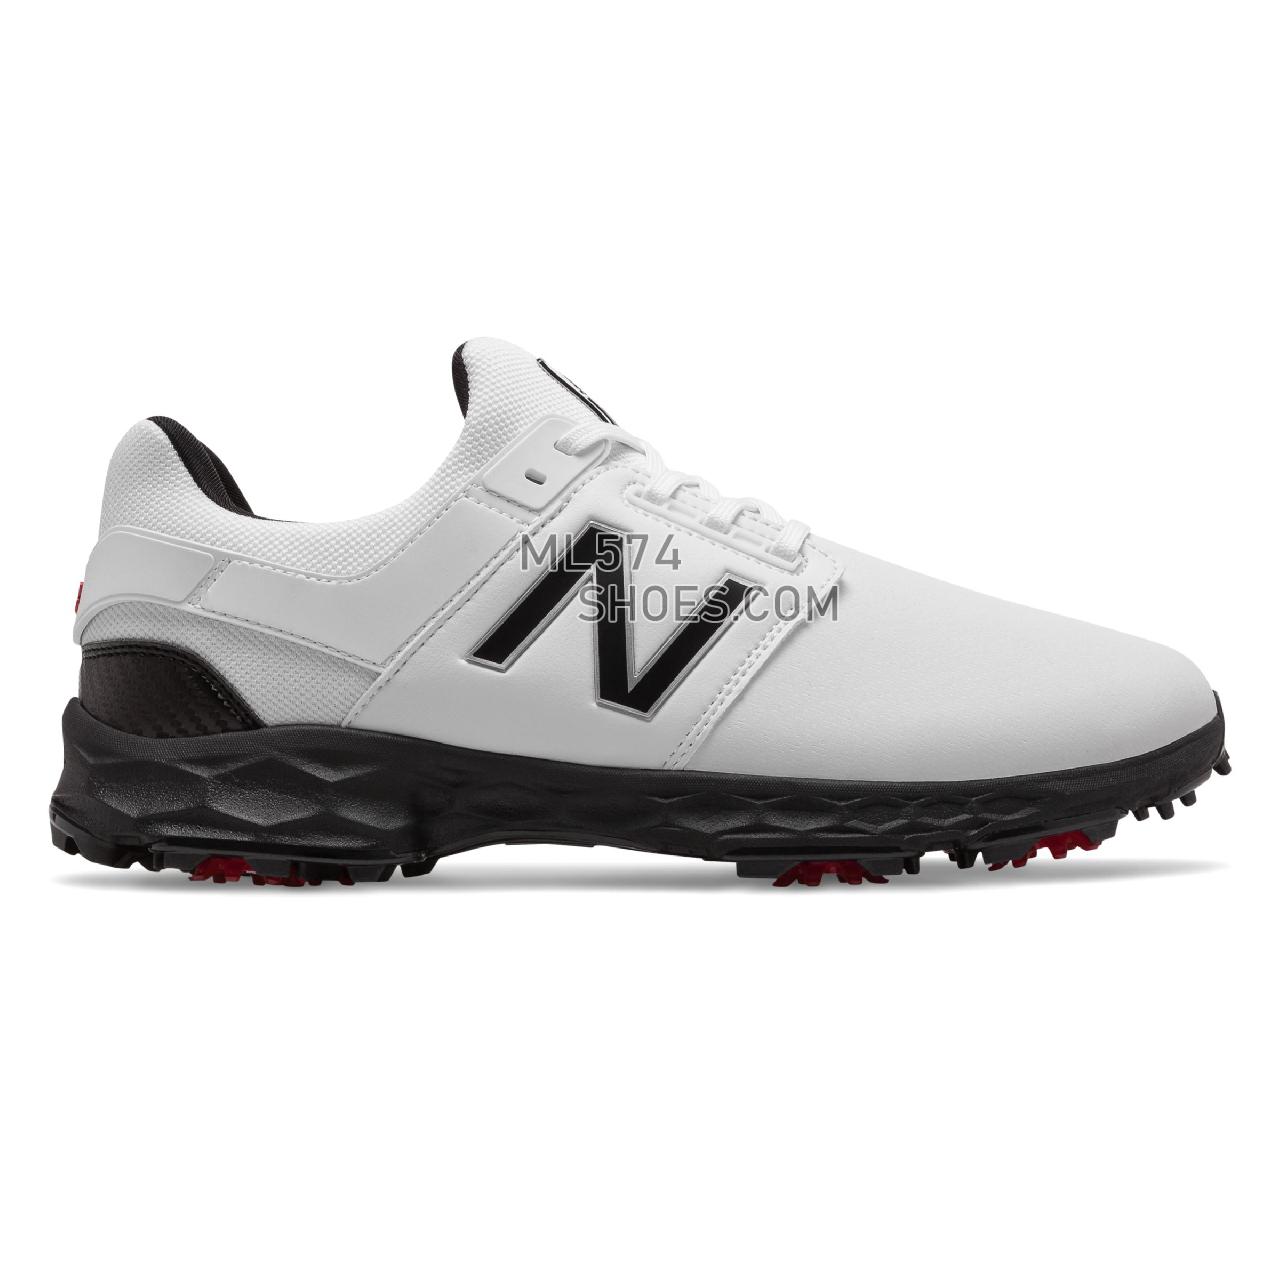 New Balance Fresh Foam LinksPro - Men's Golf - White with Black - NBG4001WK